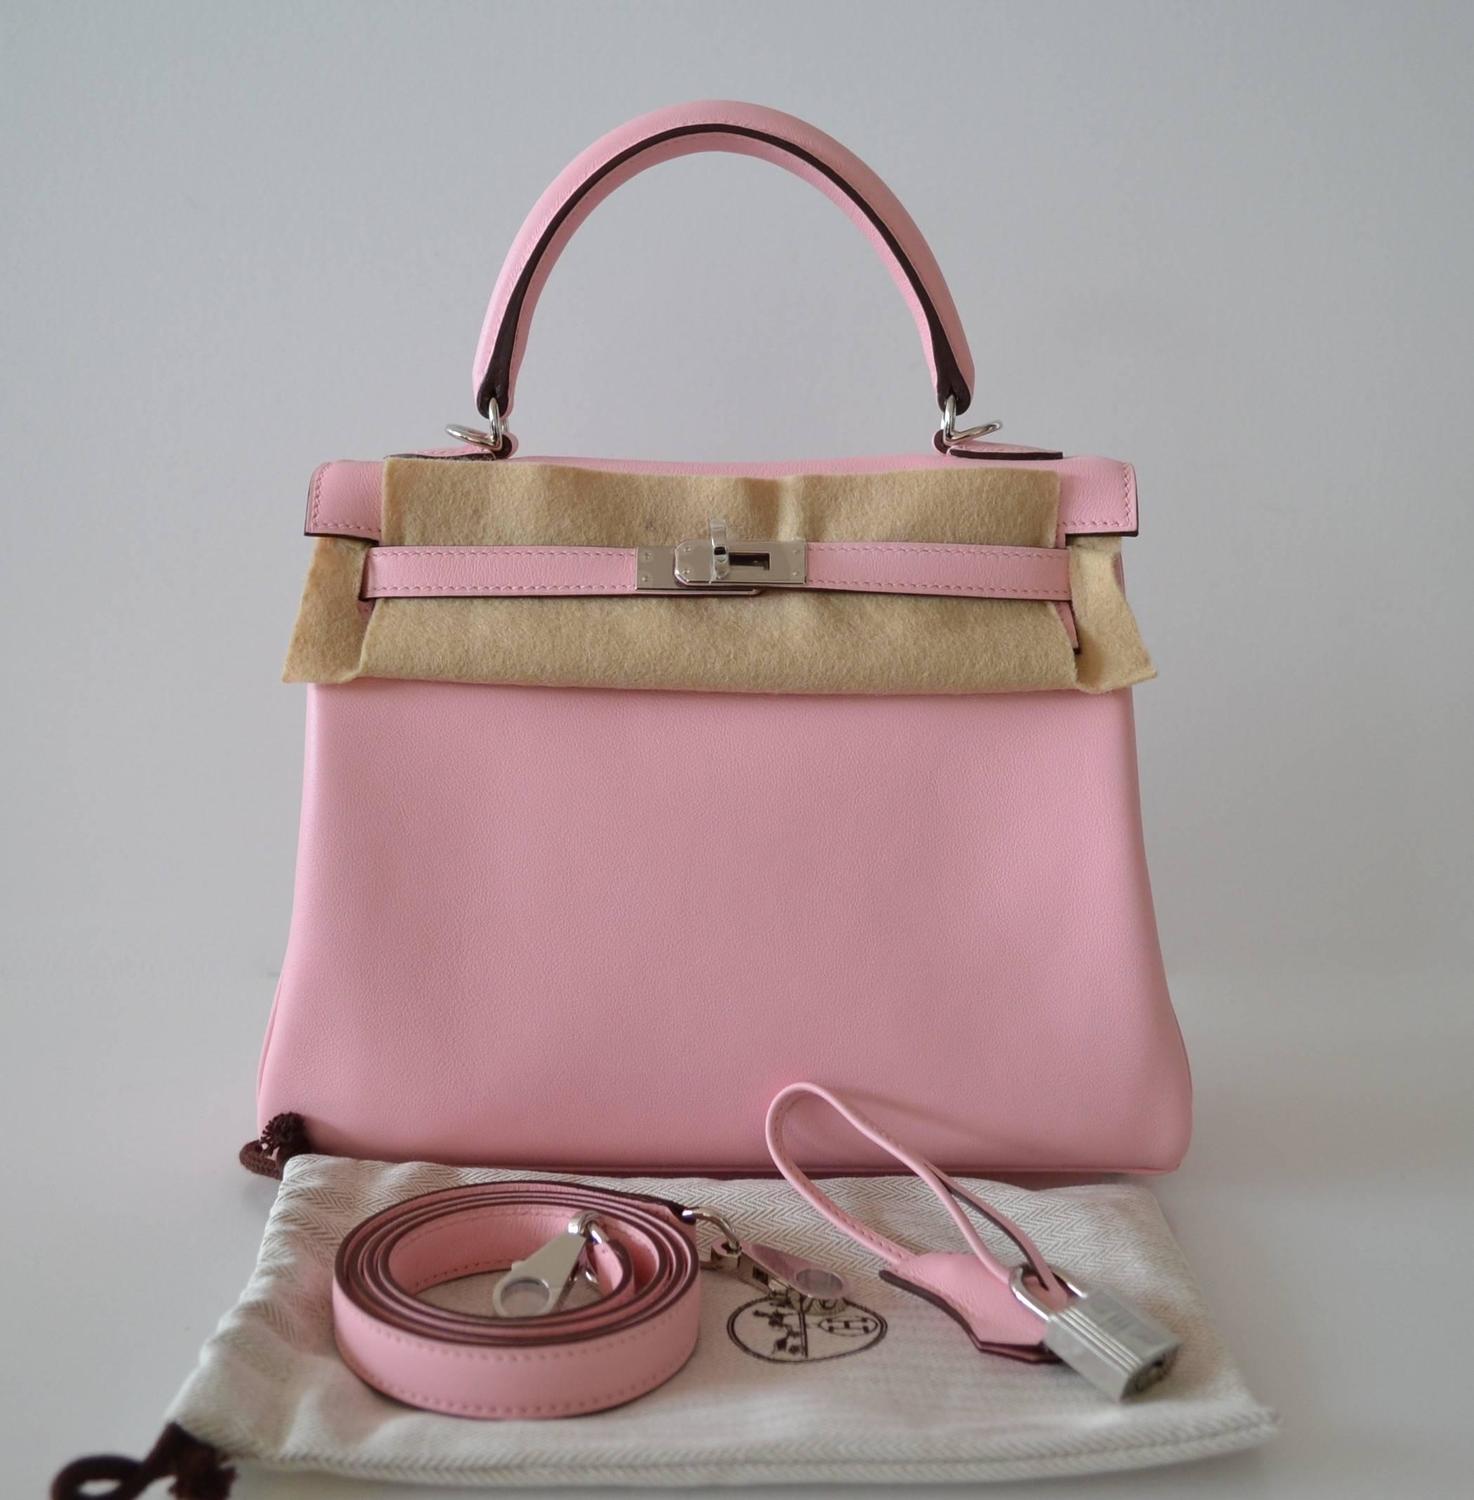 hermes rose sakura swift 25cm kelly bag with gold hardware, ostrich birkin bag